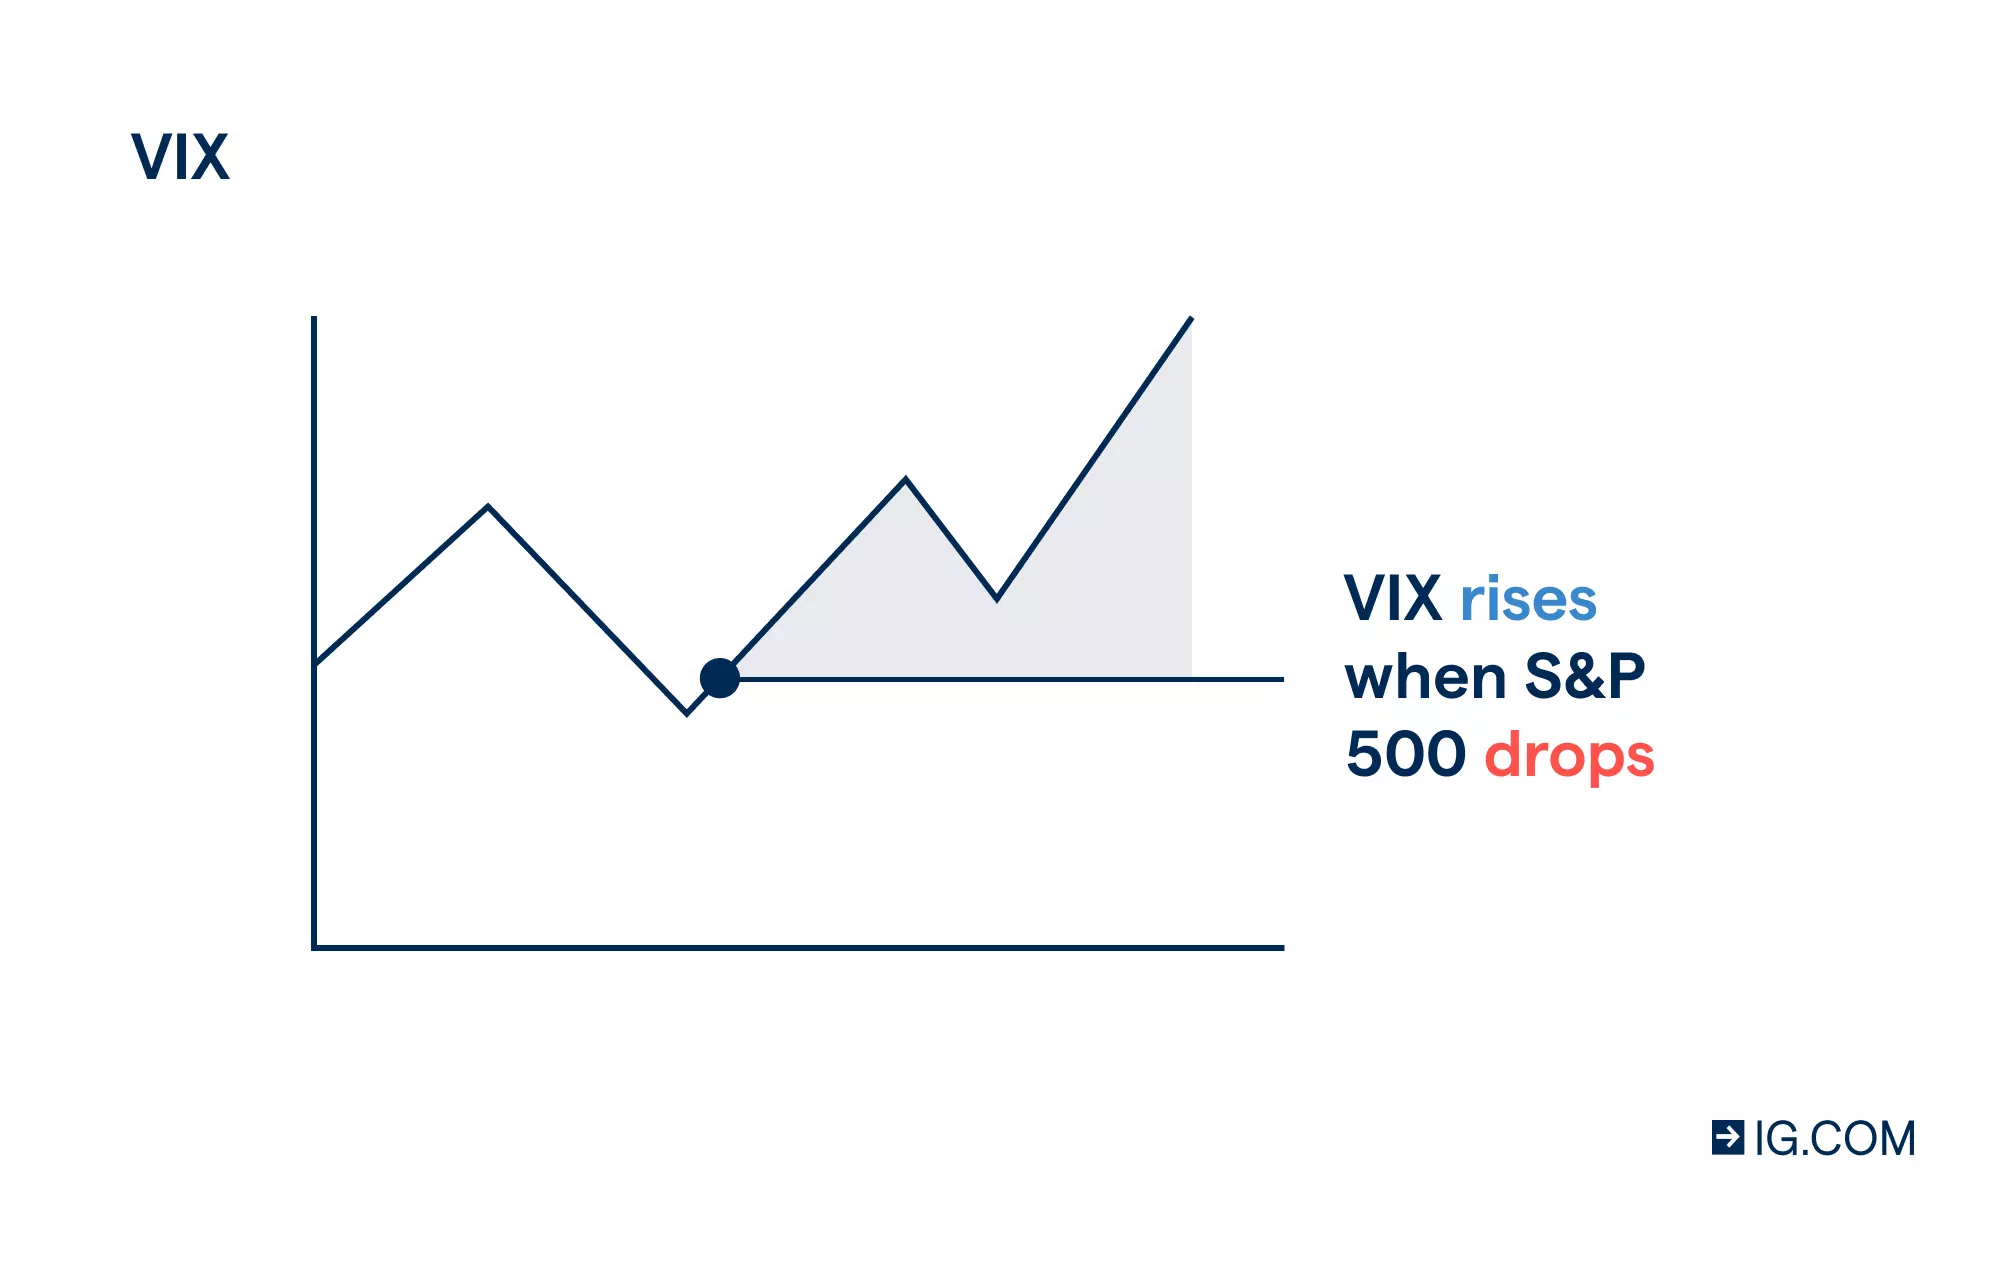 Vix volatility index could rise when the S&P 500 drops